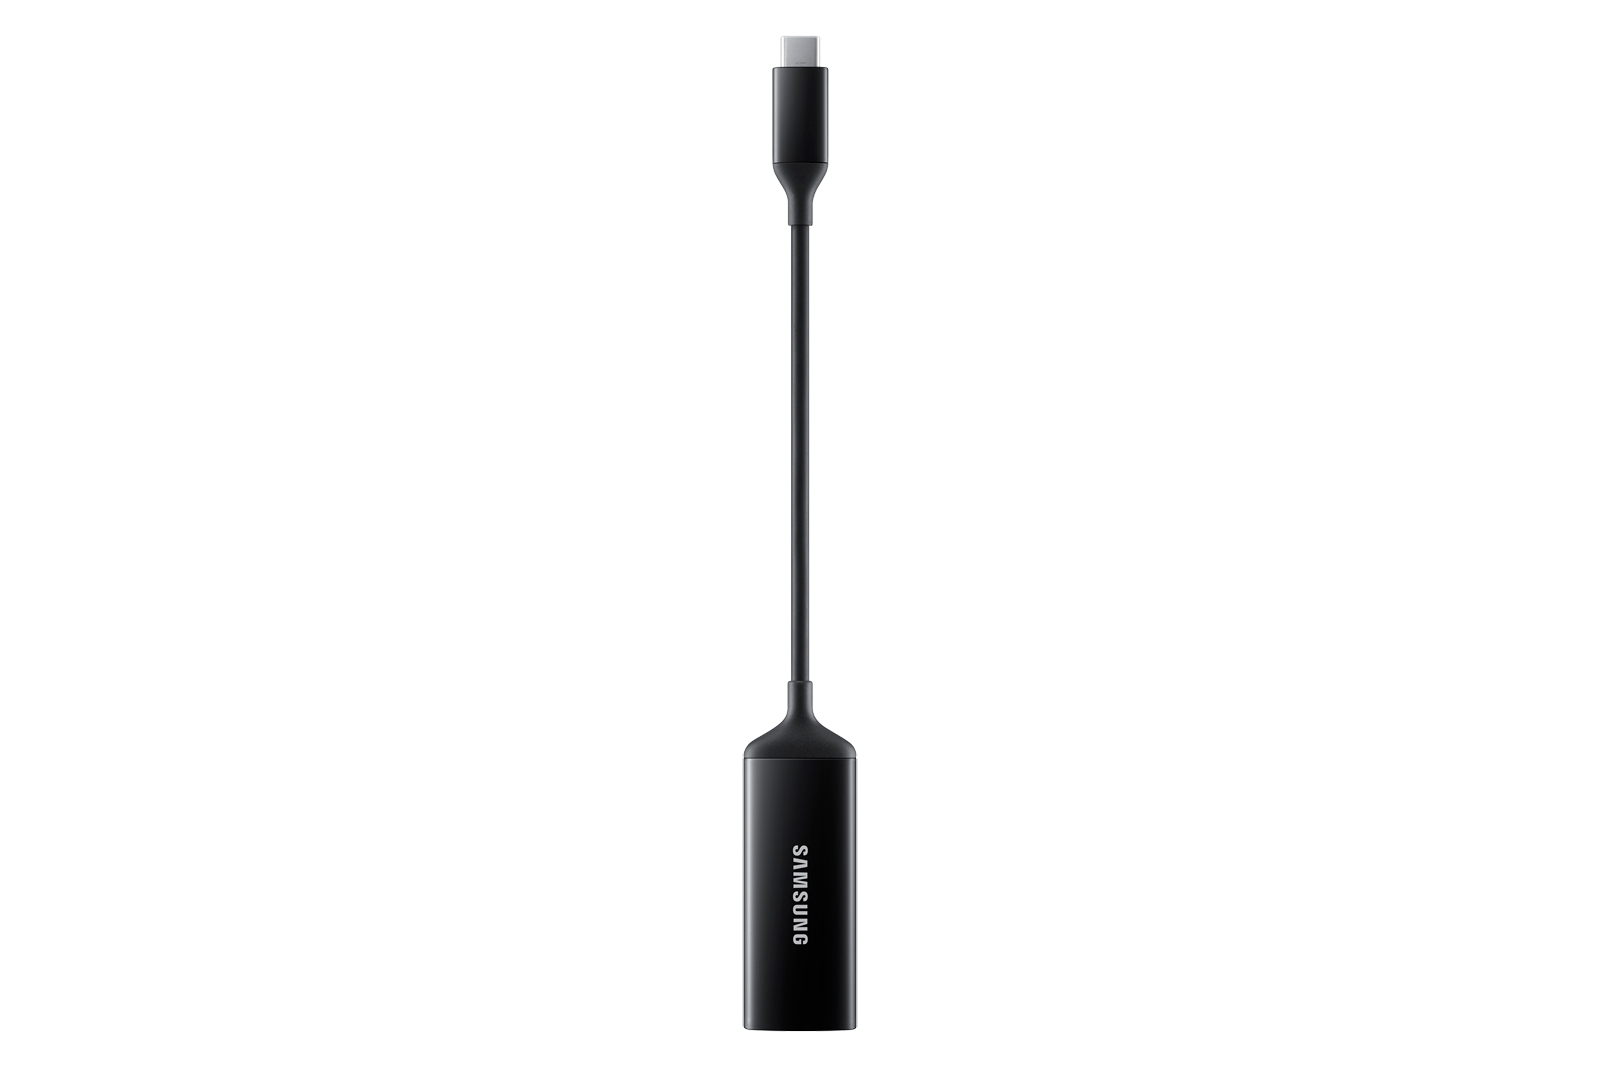  Samsung USB-C to HDMI Adapter, Black - MAIN-31176